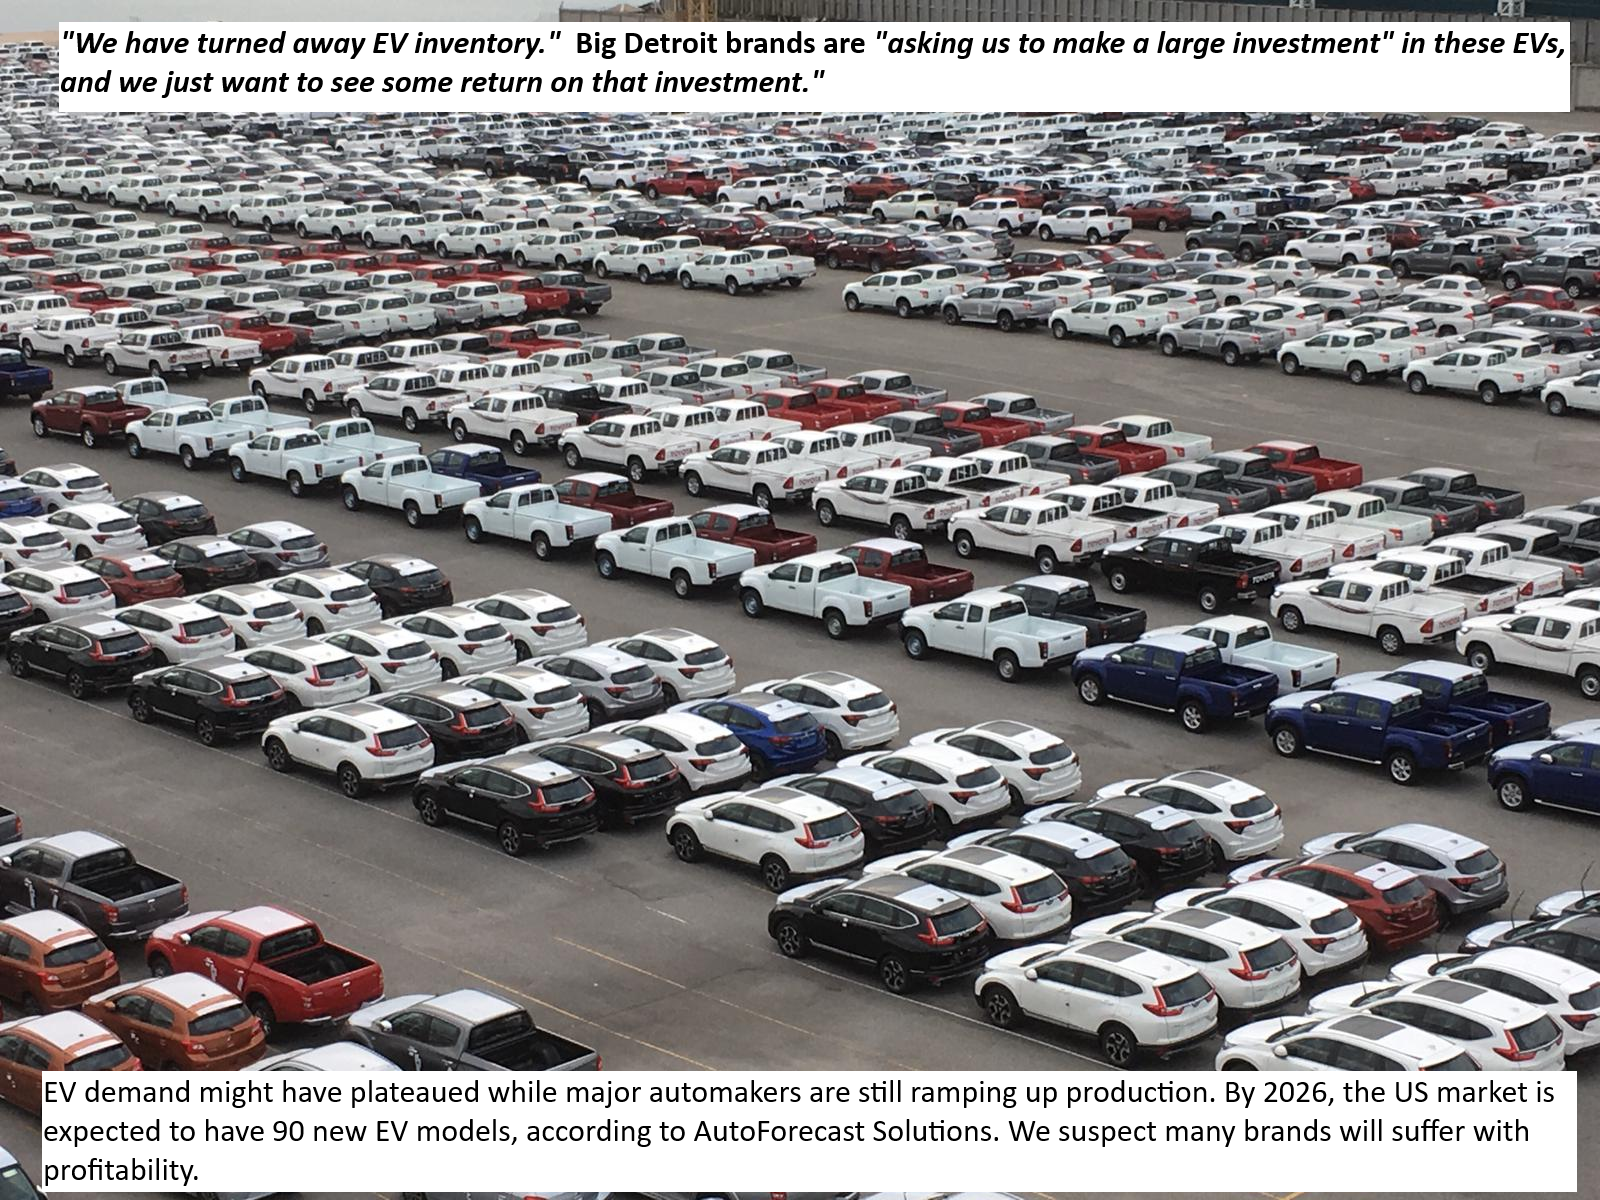 UnderTheLens-08-23-23-SEPTEMBER-The-Realities-of-Bidenomics-Newsletter-3-Japan-Automakers-5 image